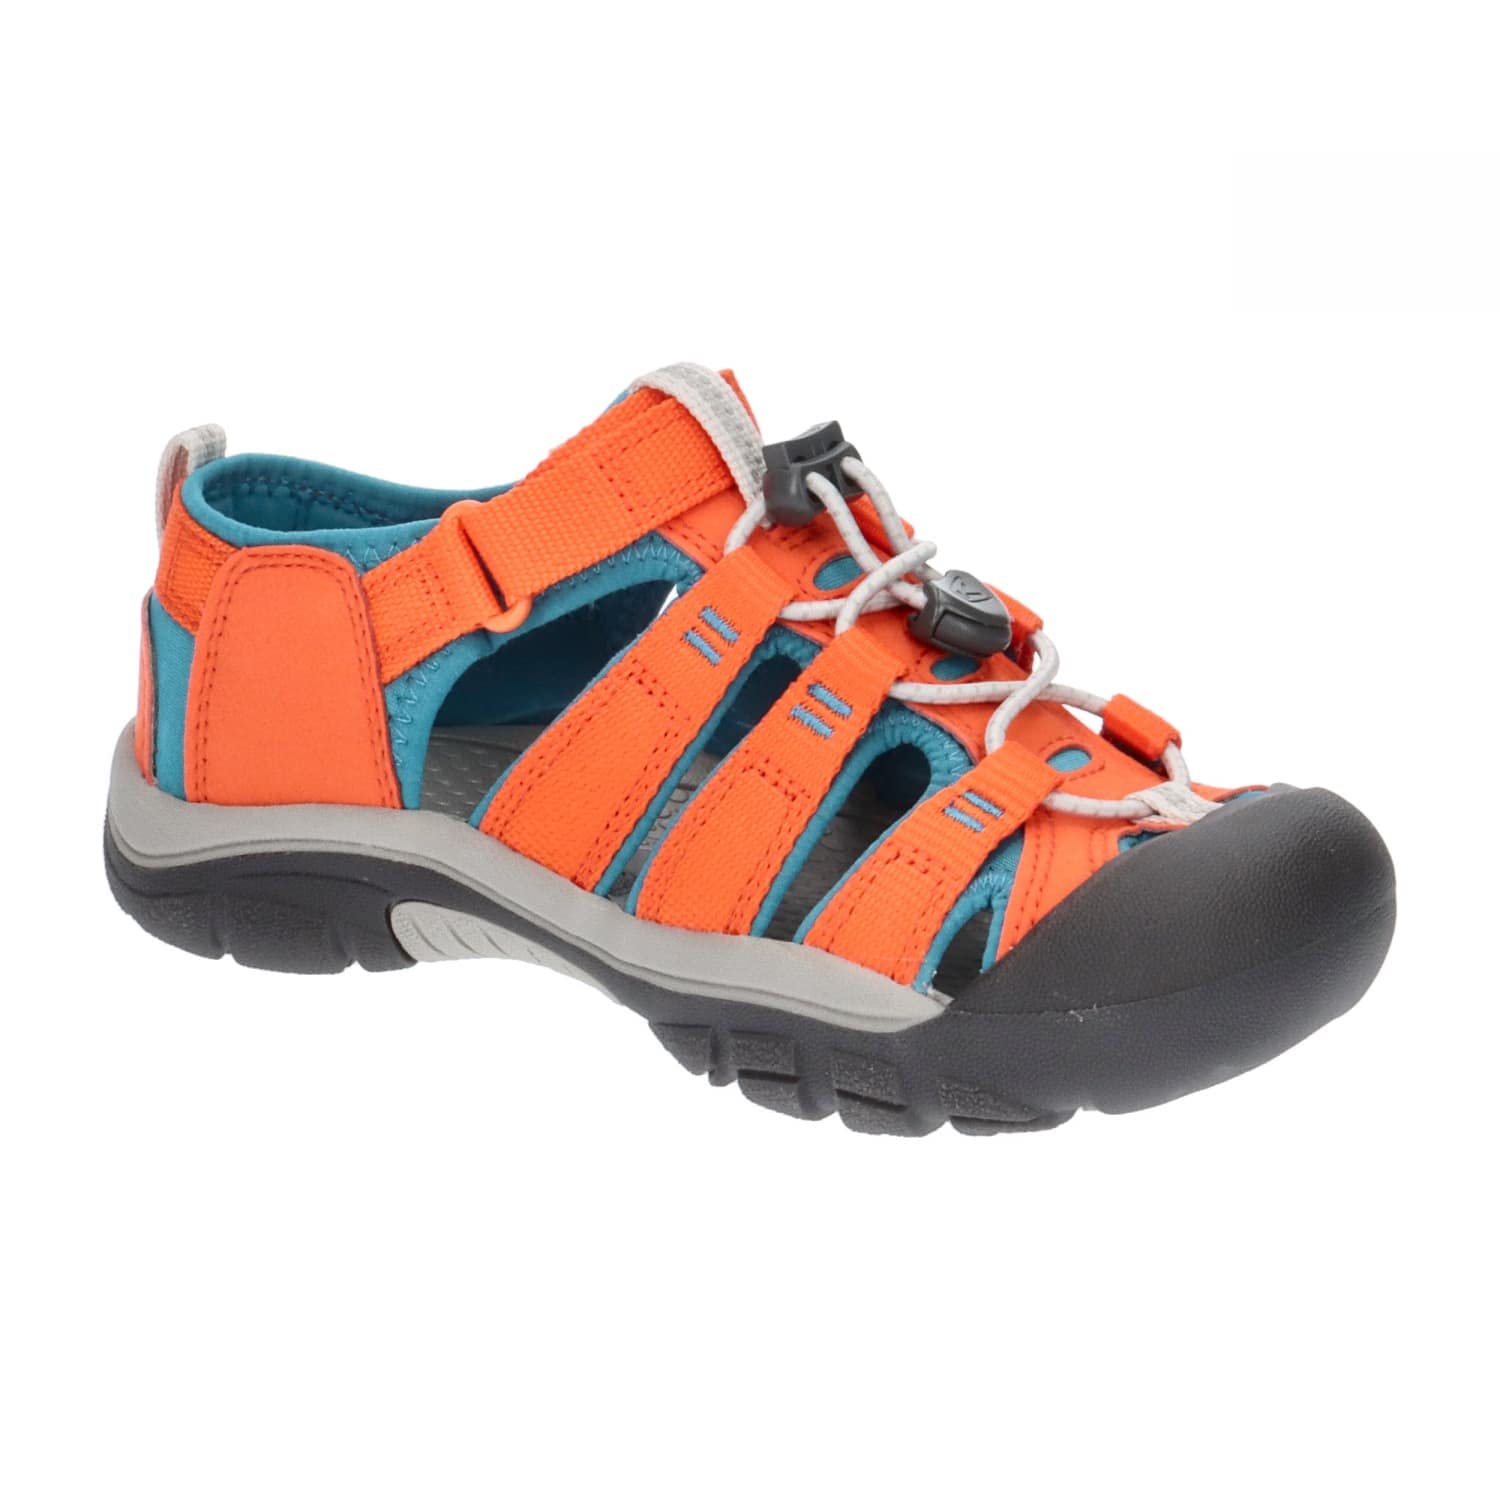 KEEN Newport H2 Closed Toe Water Sandals, Safety Orange/Fjord Blue, 4 US Unisex Big Kid